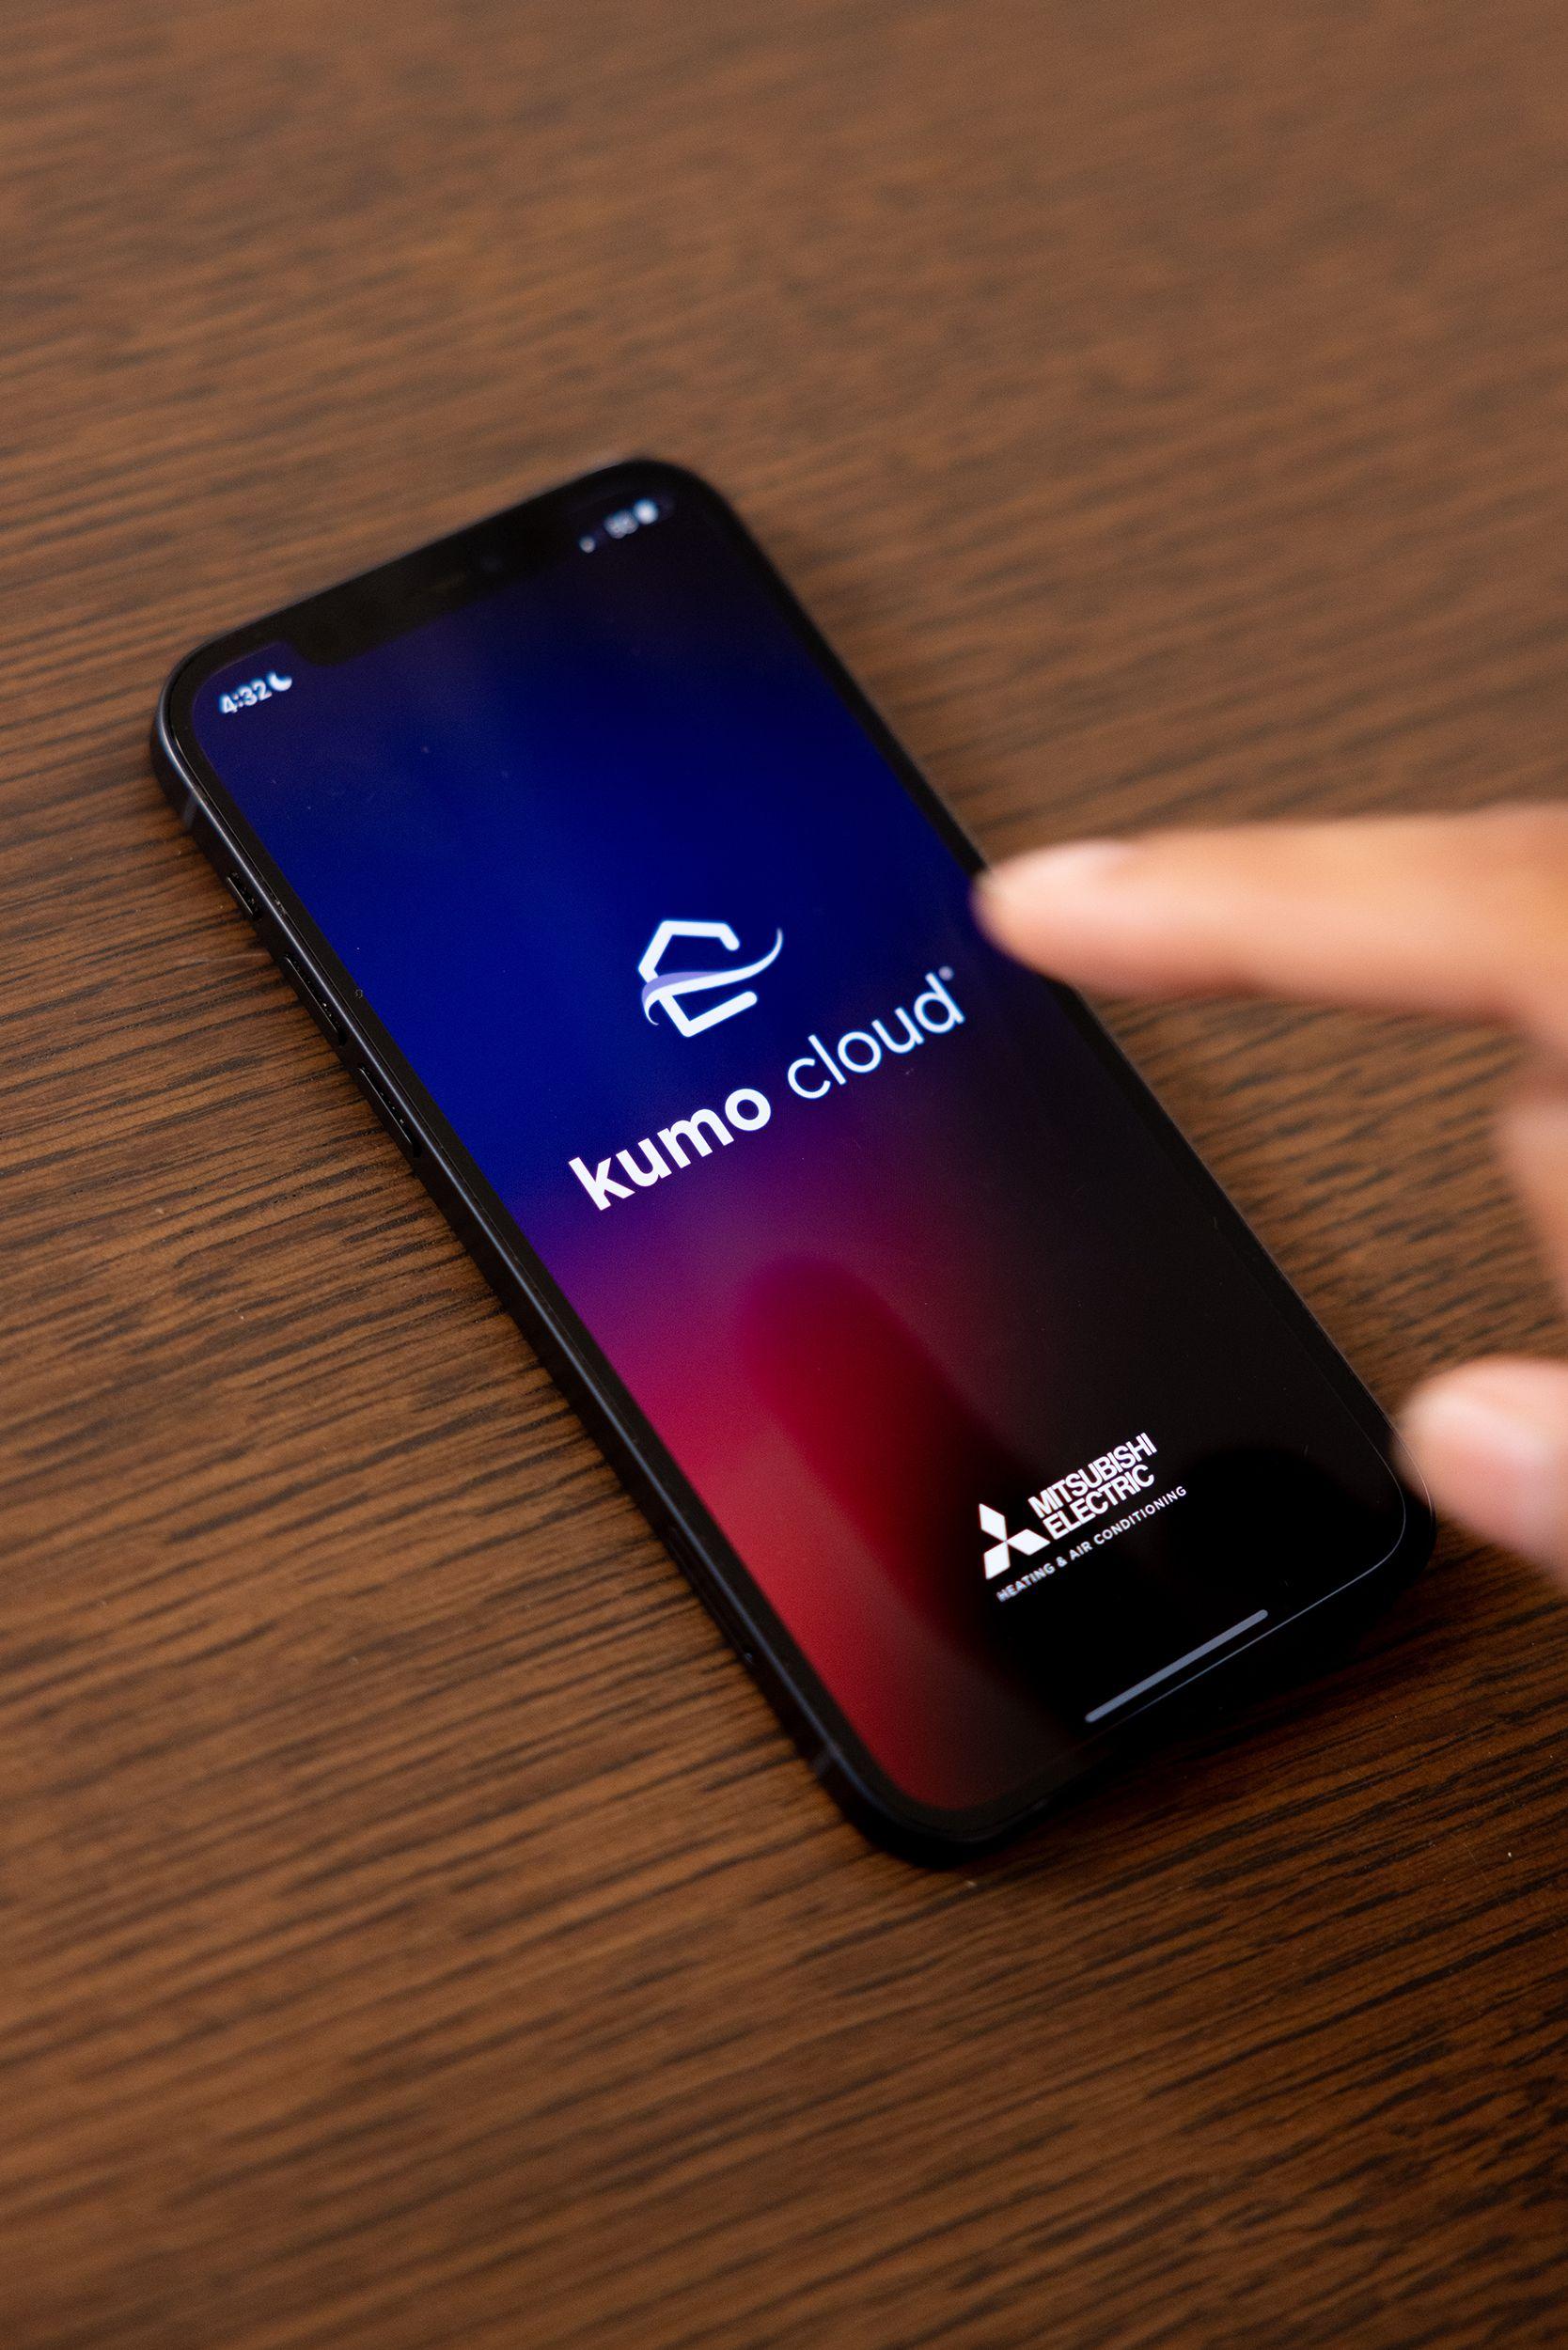 kumo cloud app